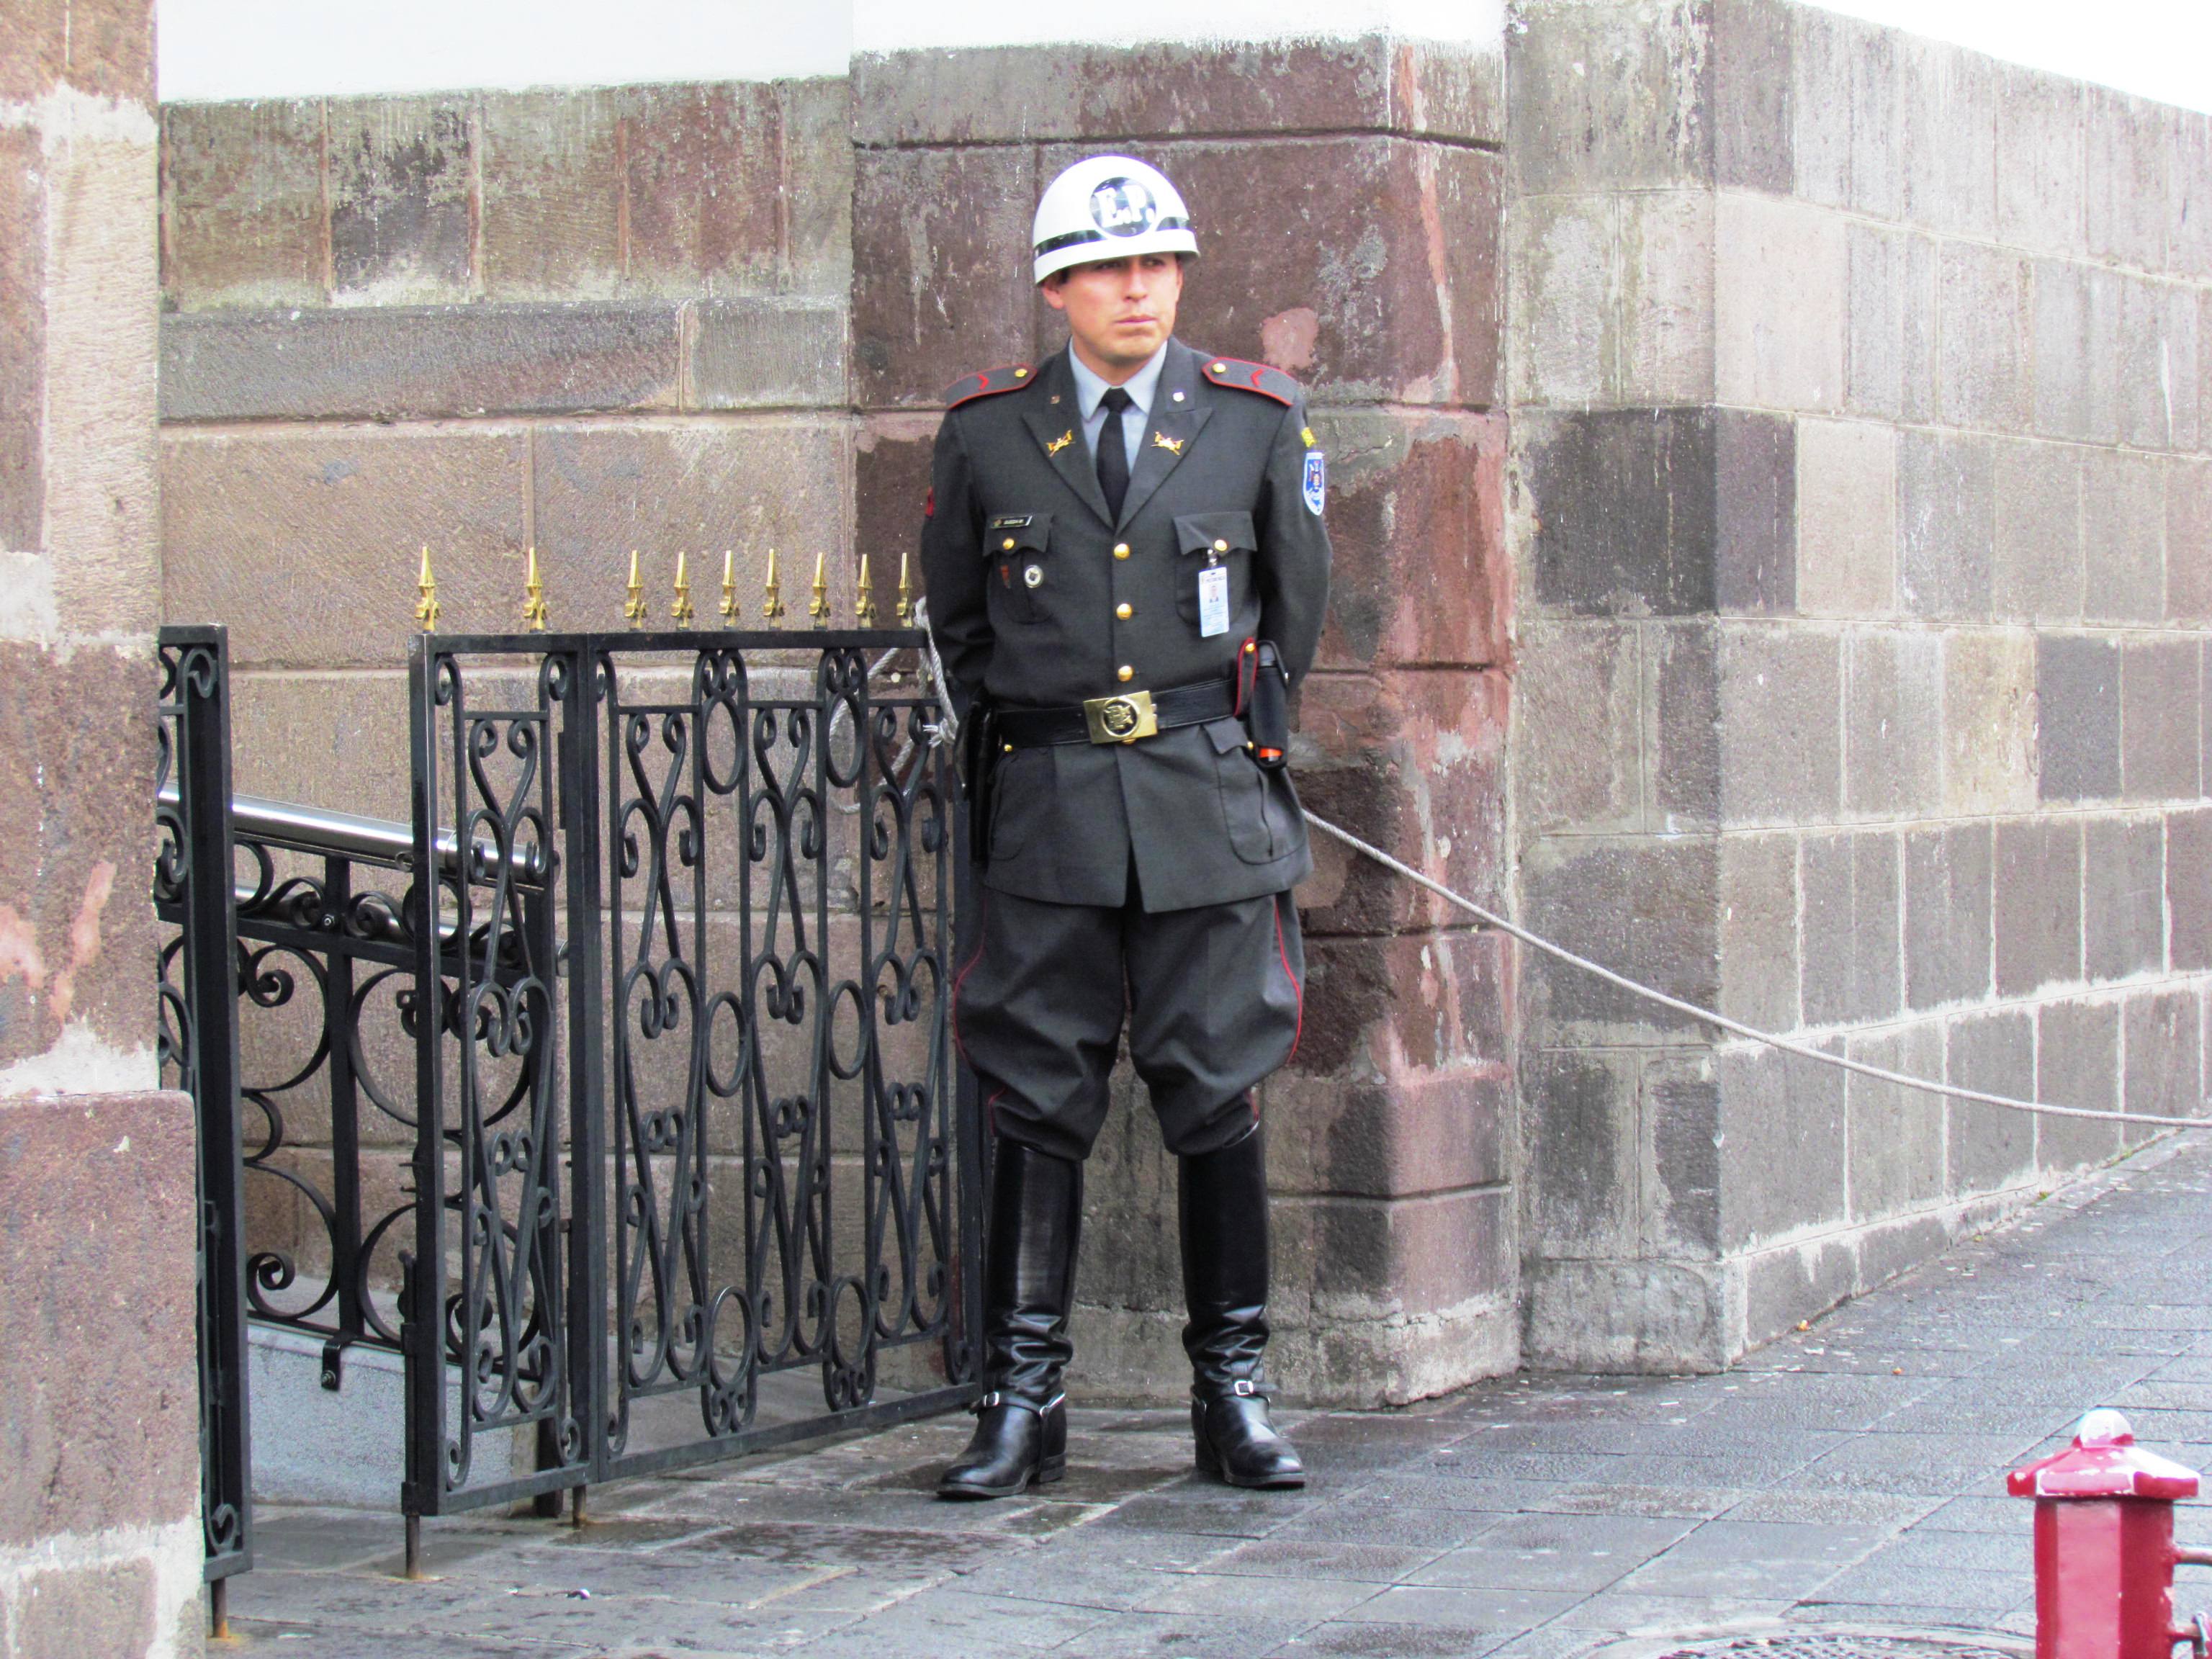 Foto: Guardia Presidencial - Quito (Pichincha), Ecuador